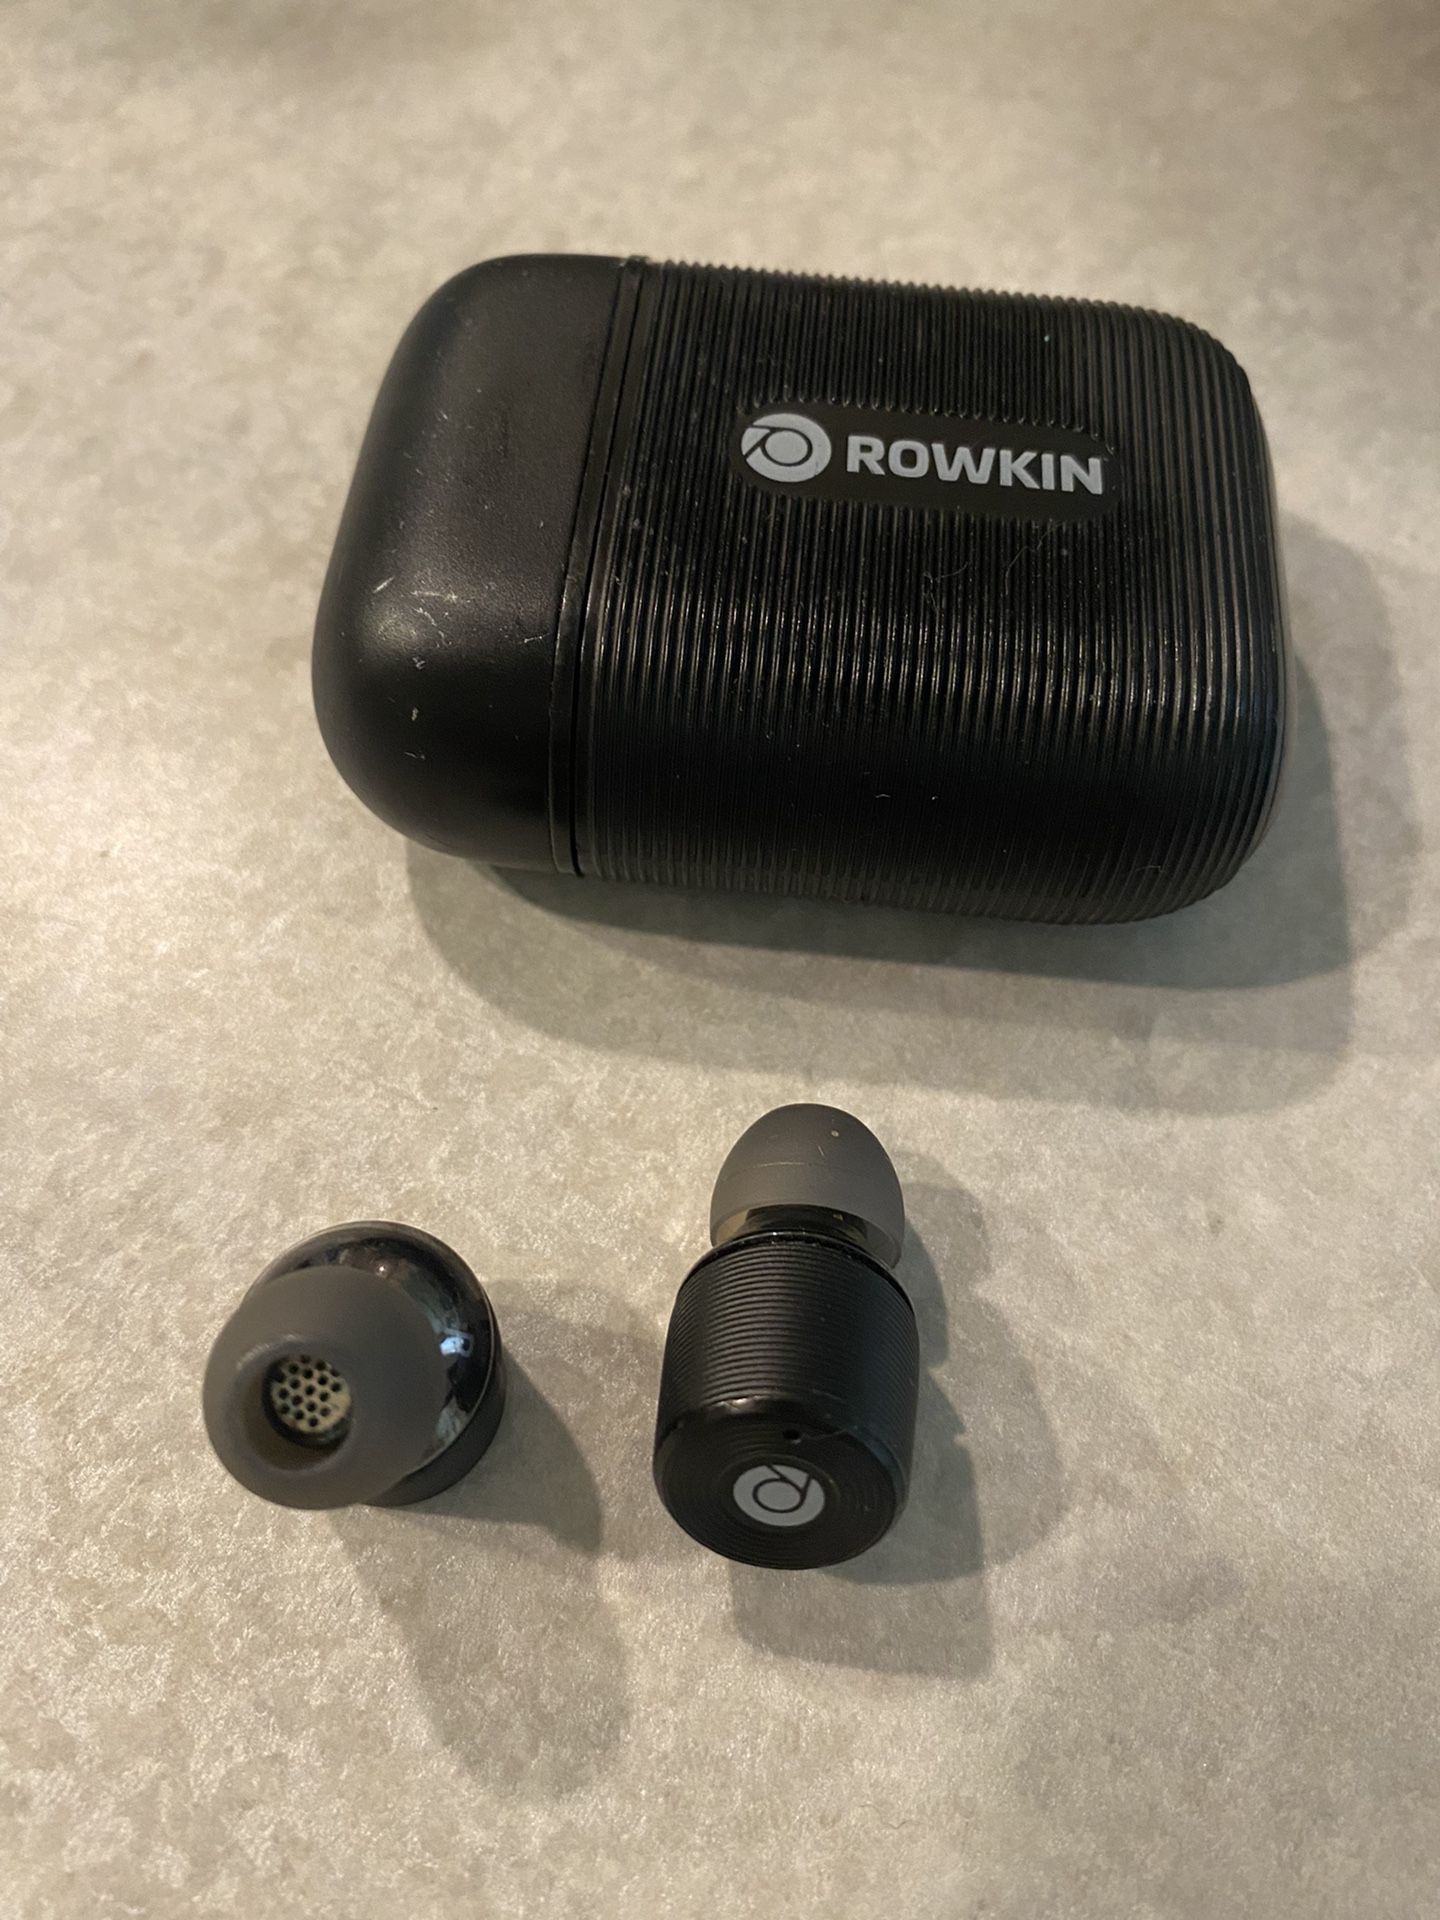 Rowkin Ascent Micro True Wireless Earbud Headphones